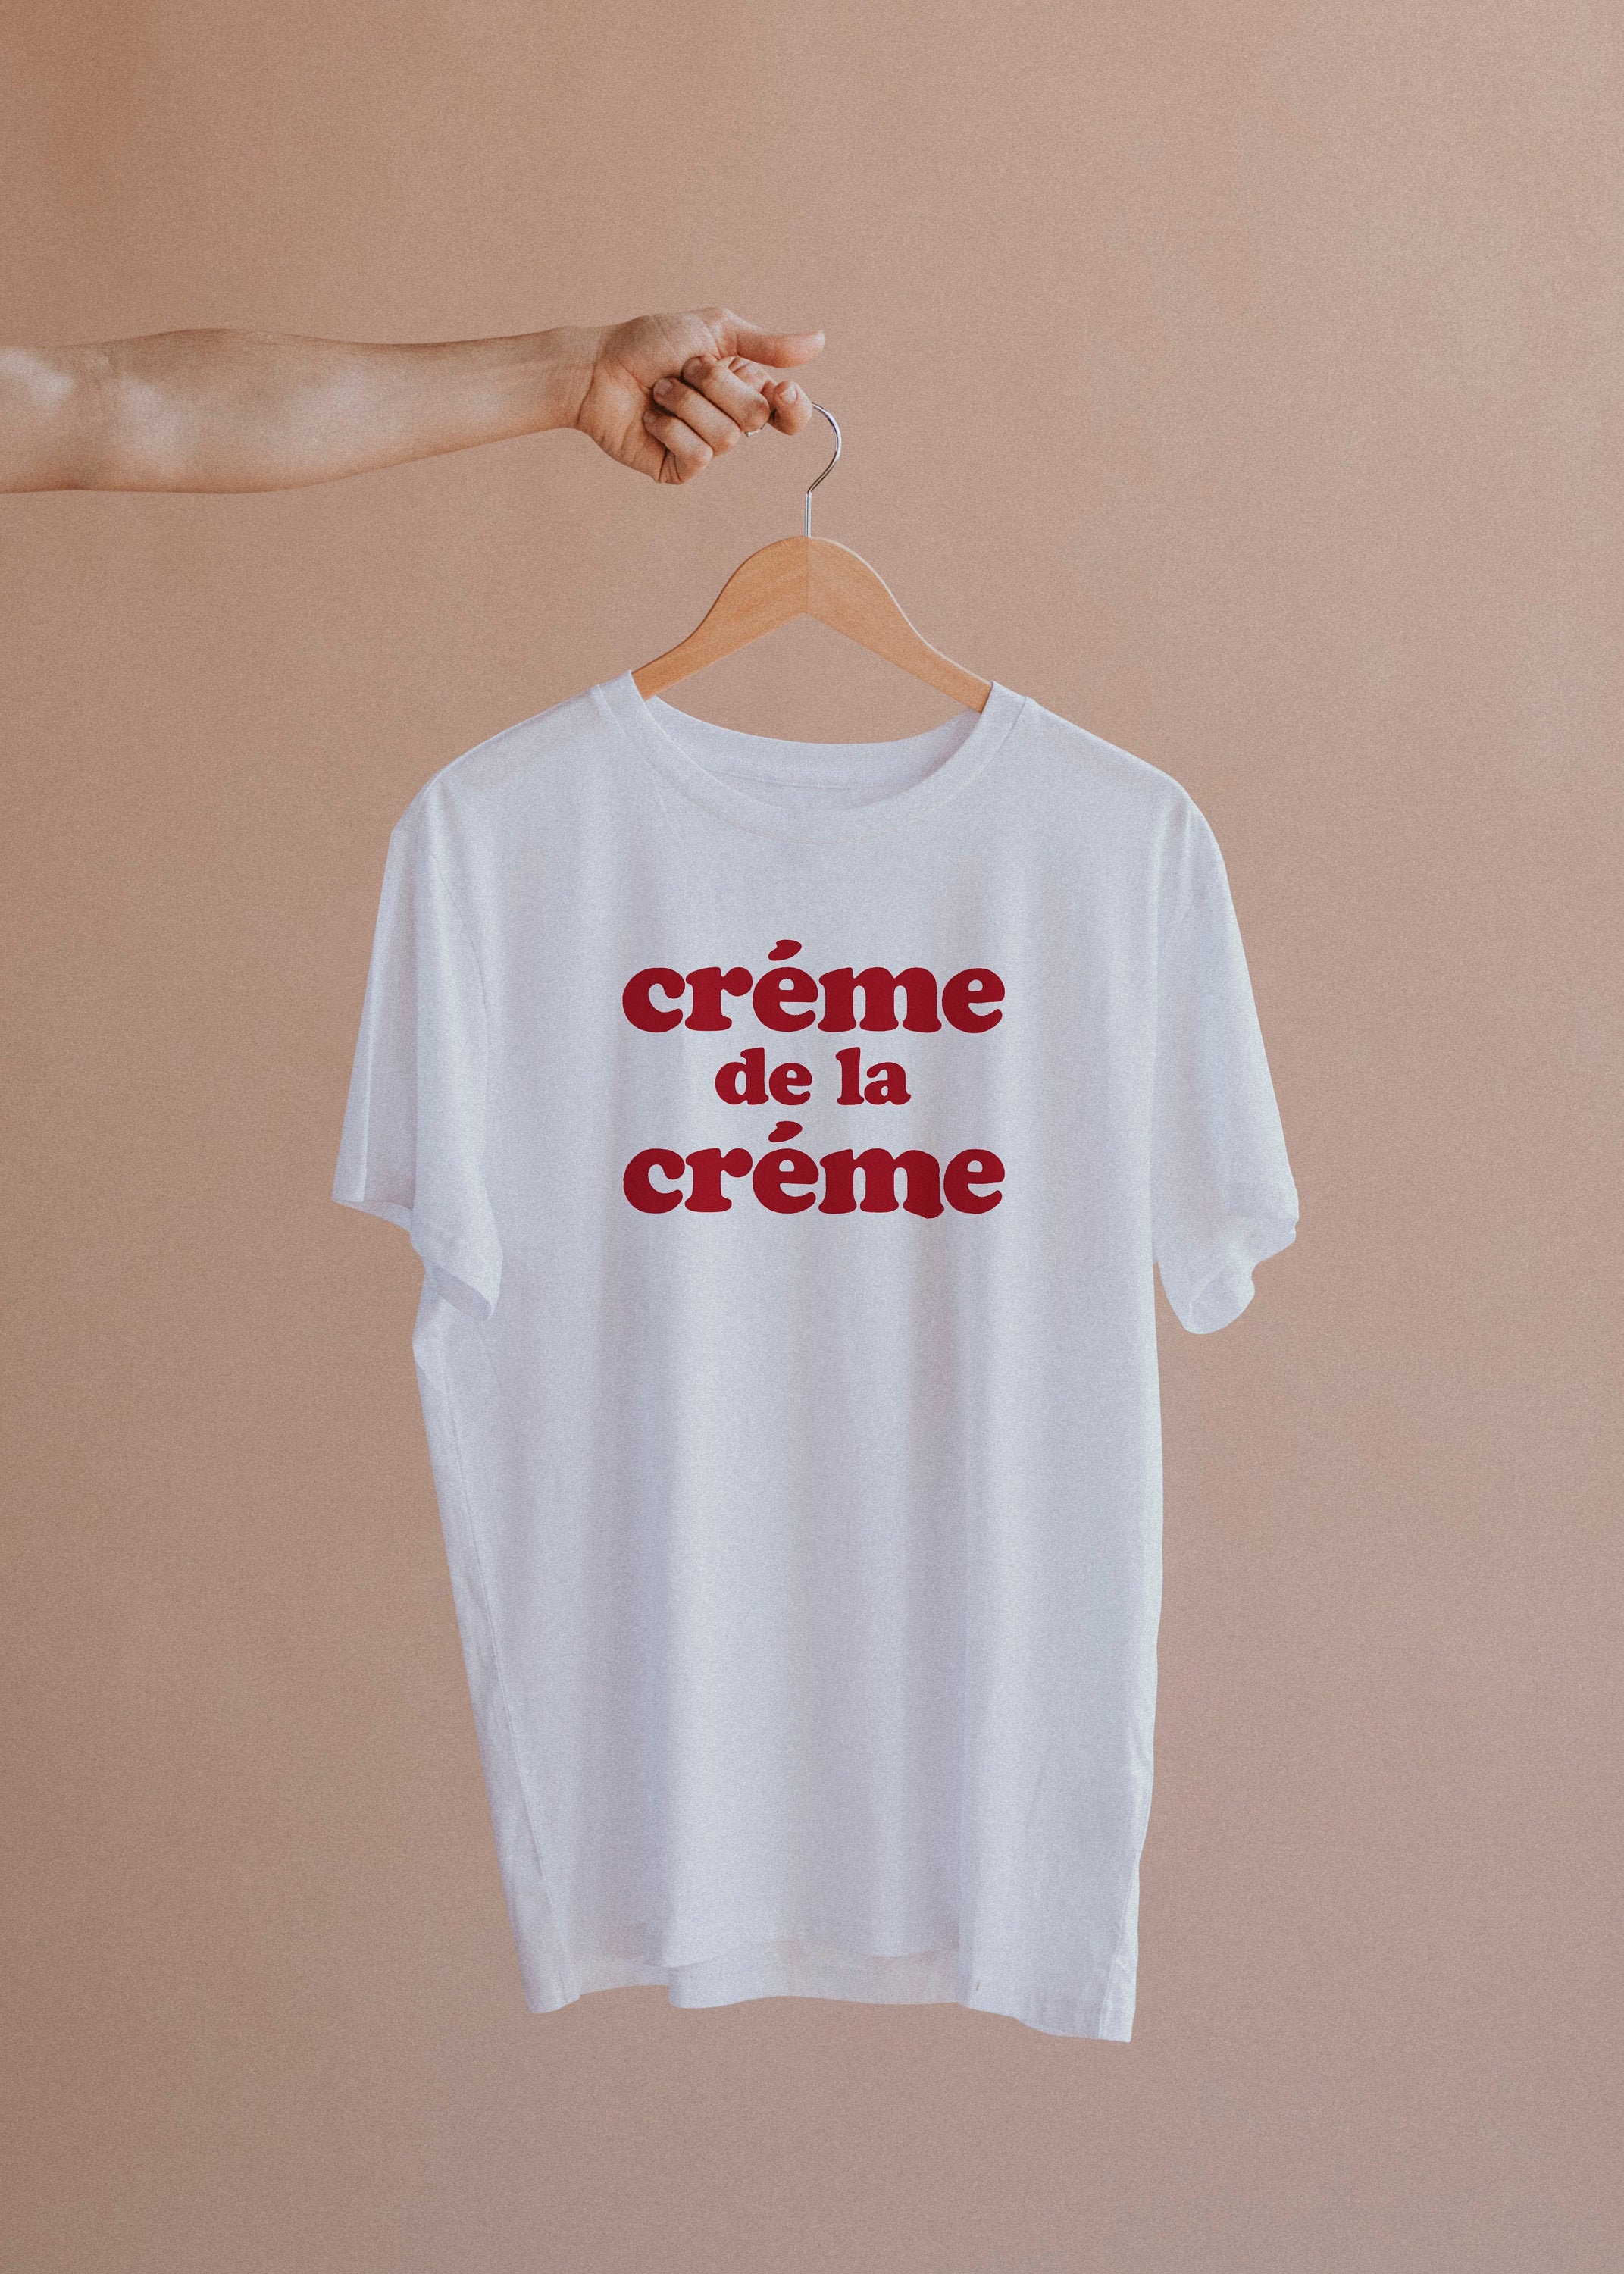 Andet Af storm bunker Women's T-shirt Typography Print Tshirt Créme De La - Etsy